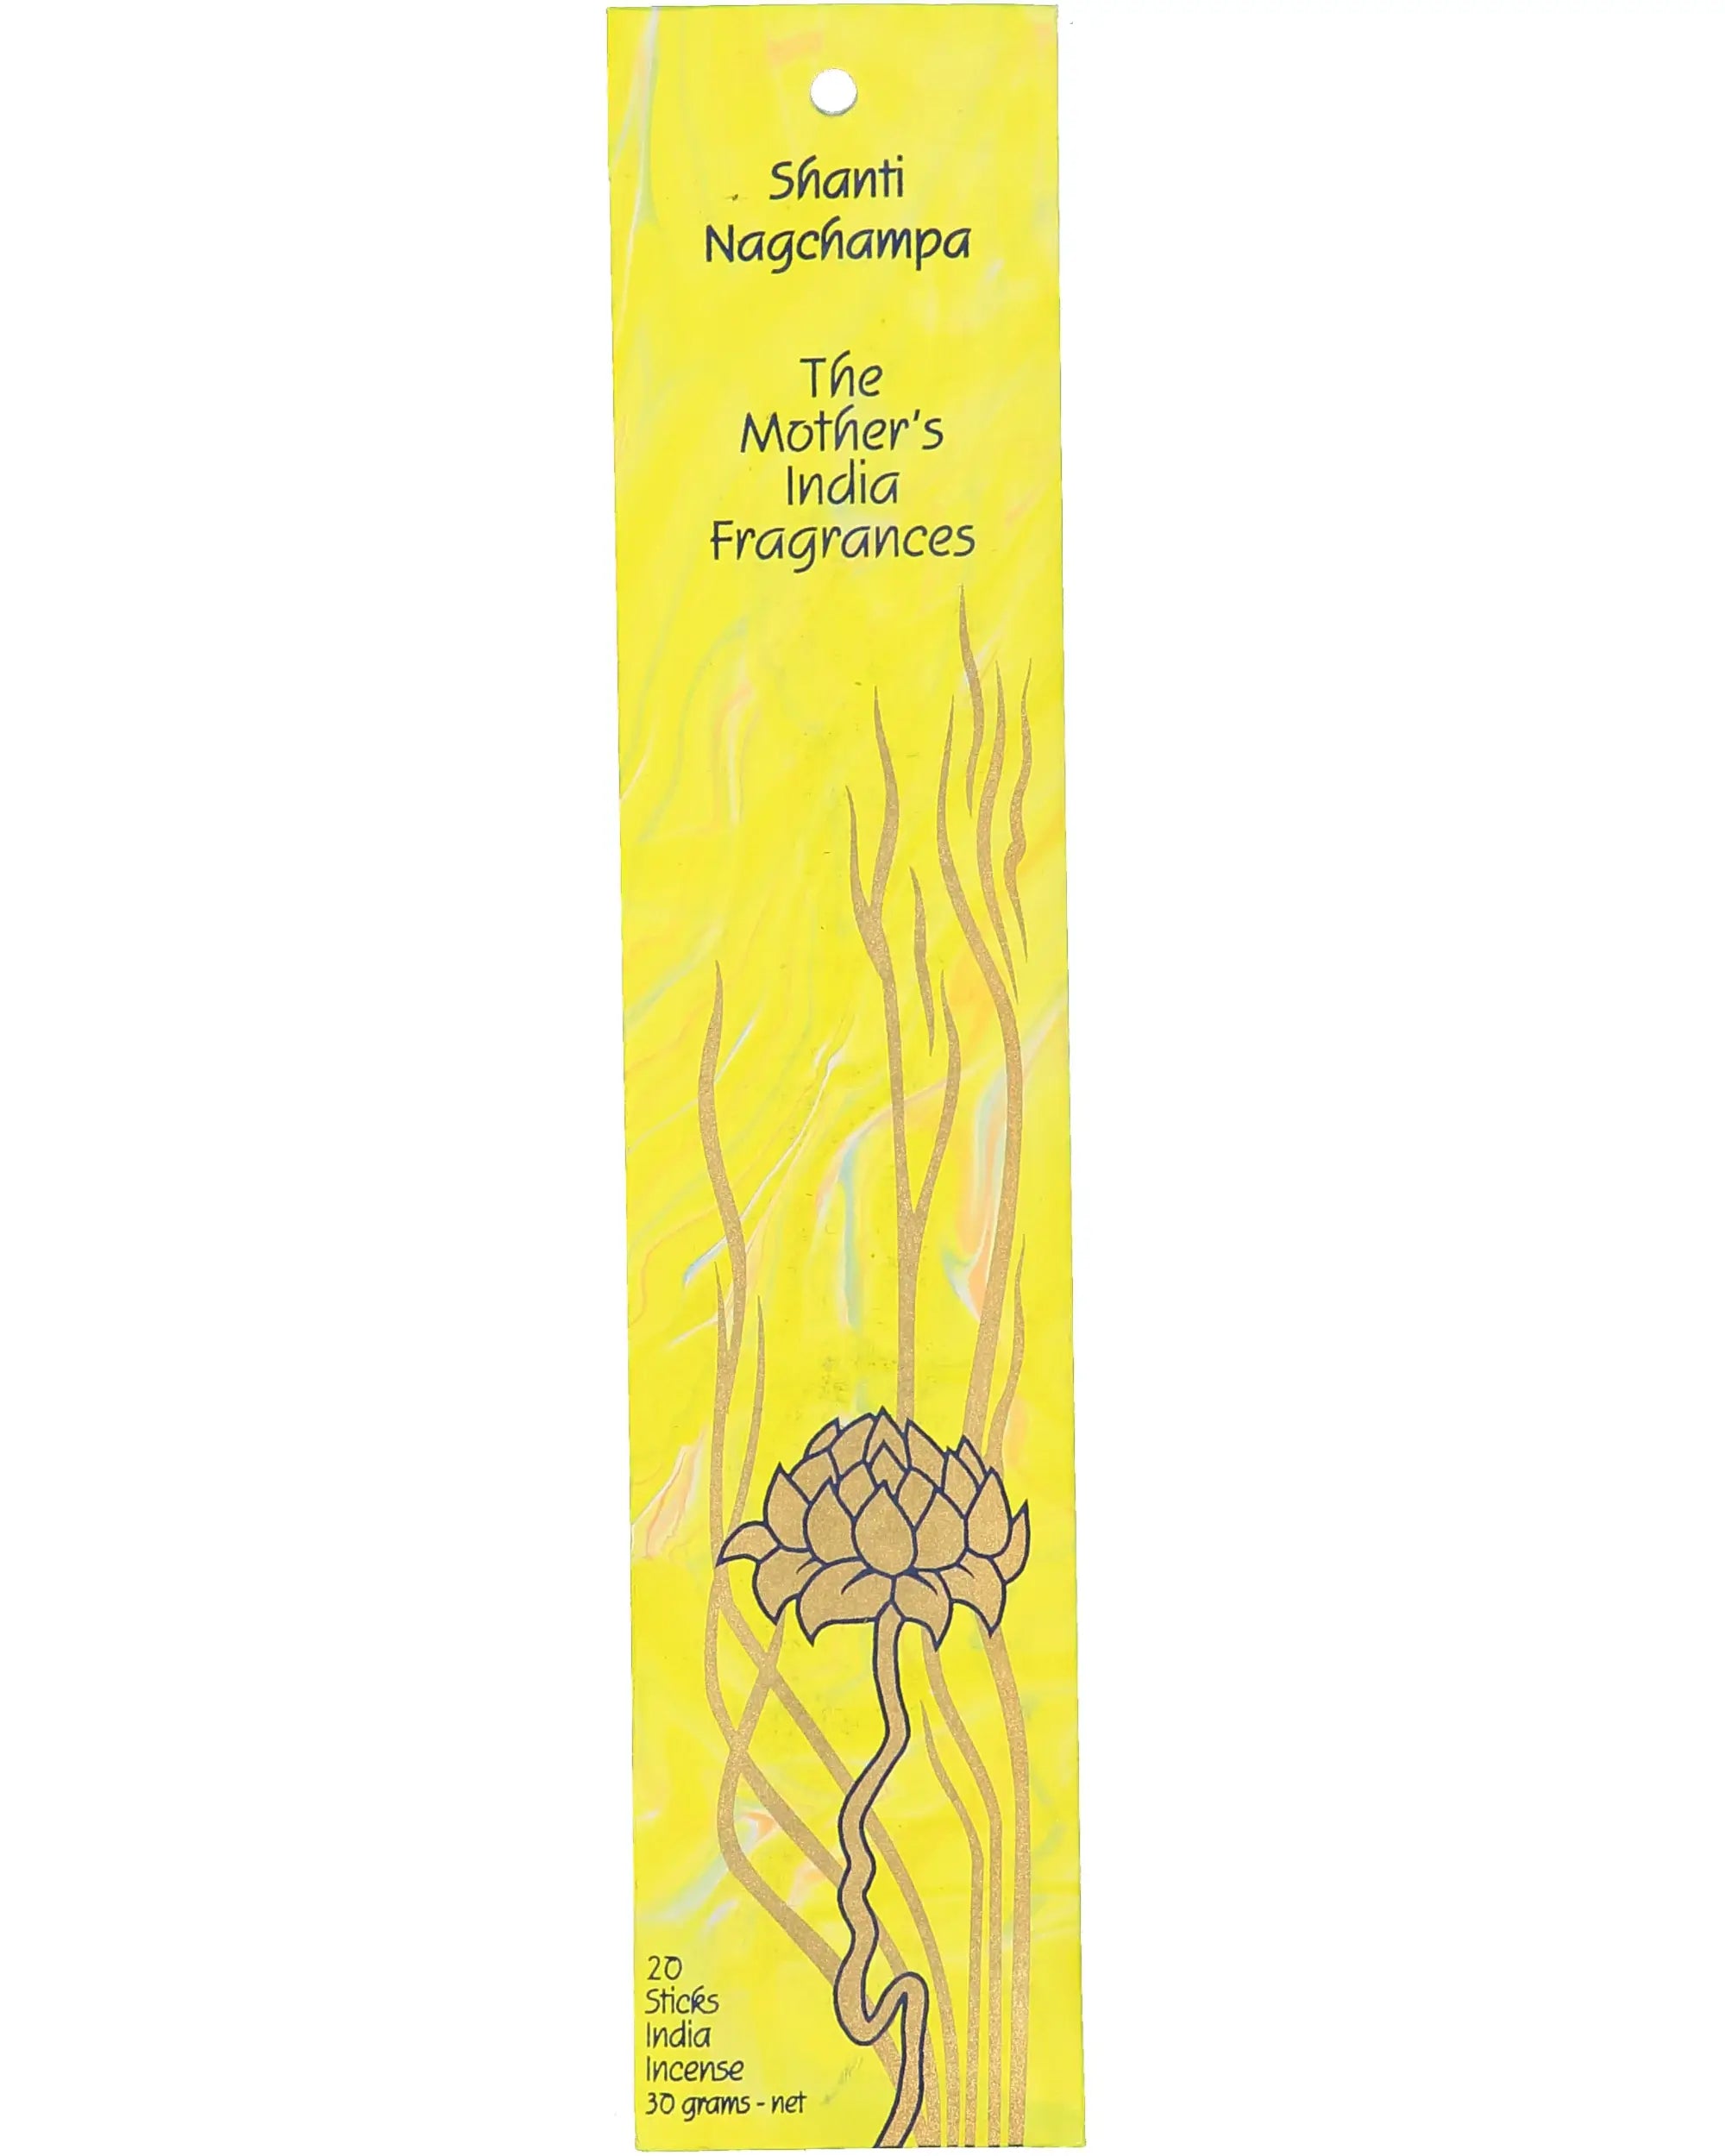 Shanti Nagchampa Real Incense by The Mother's India Fragrances Tantrika Australia